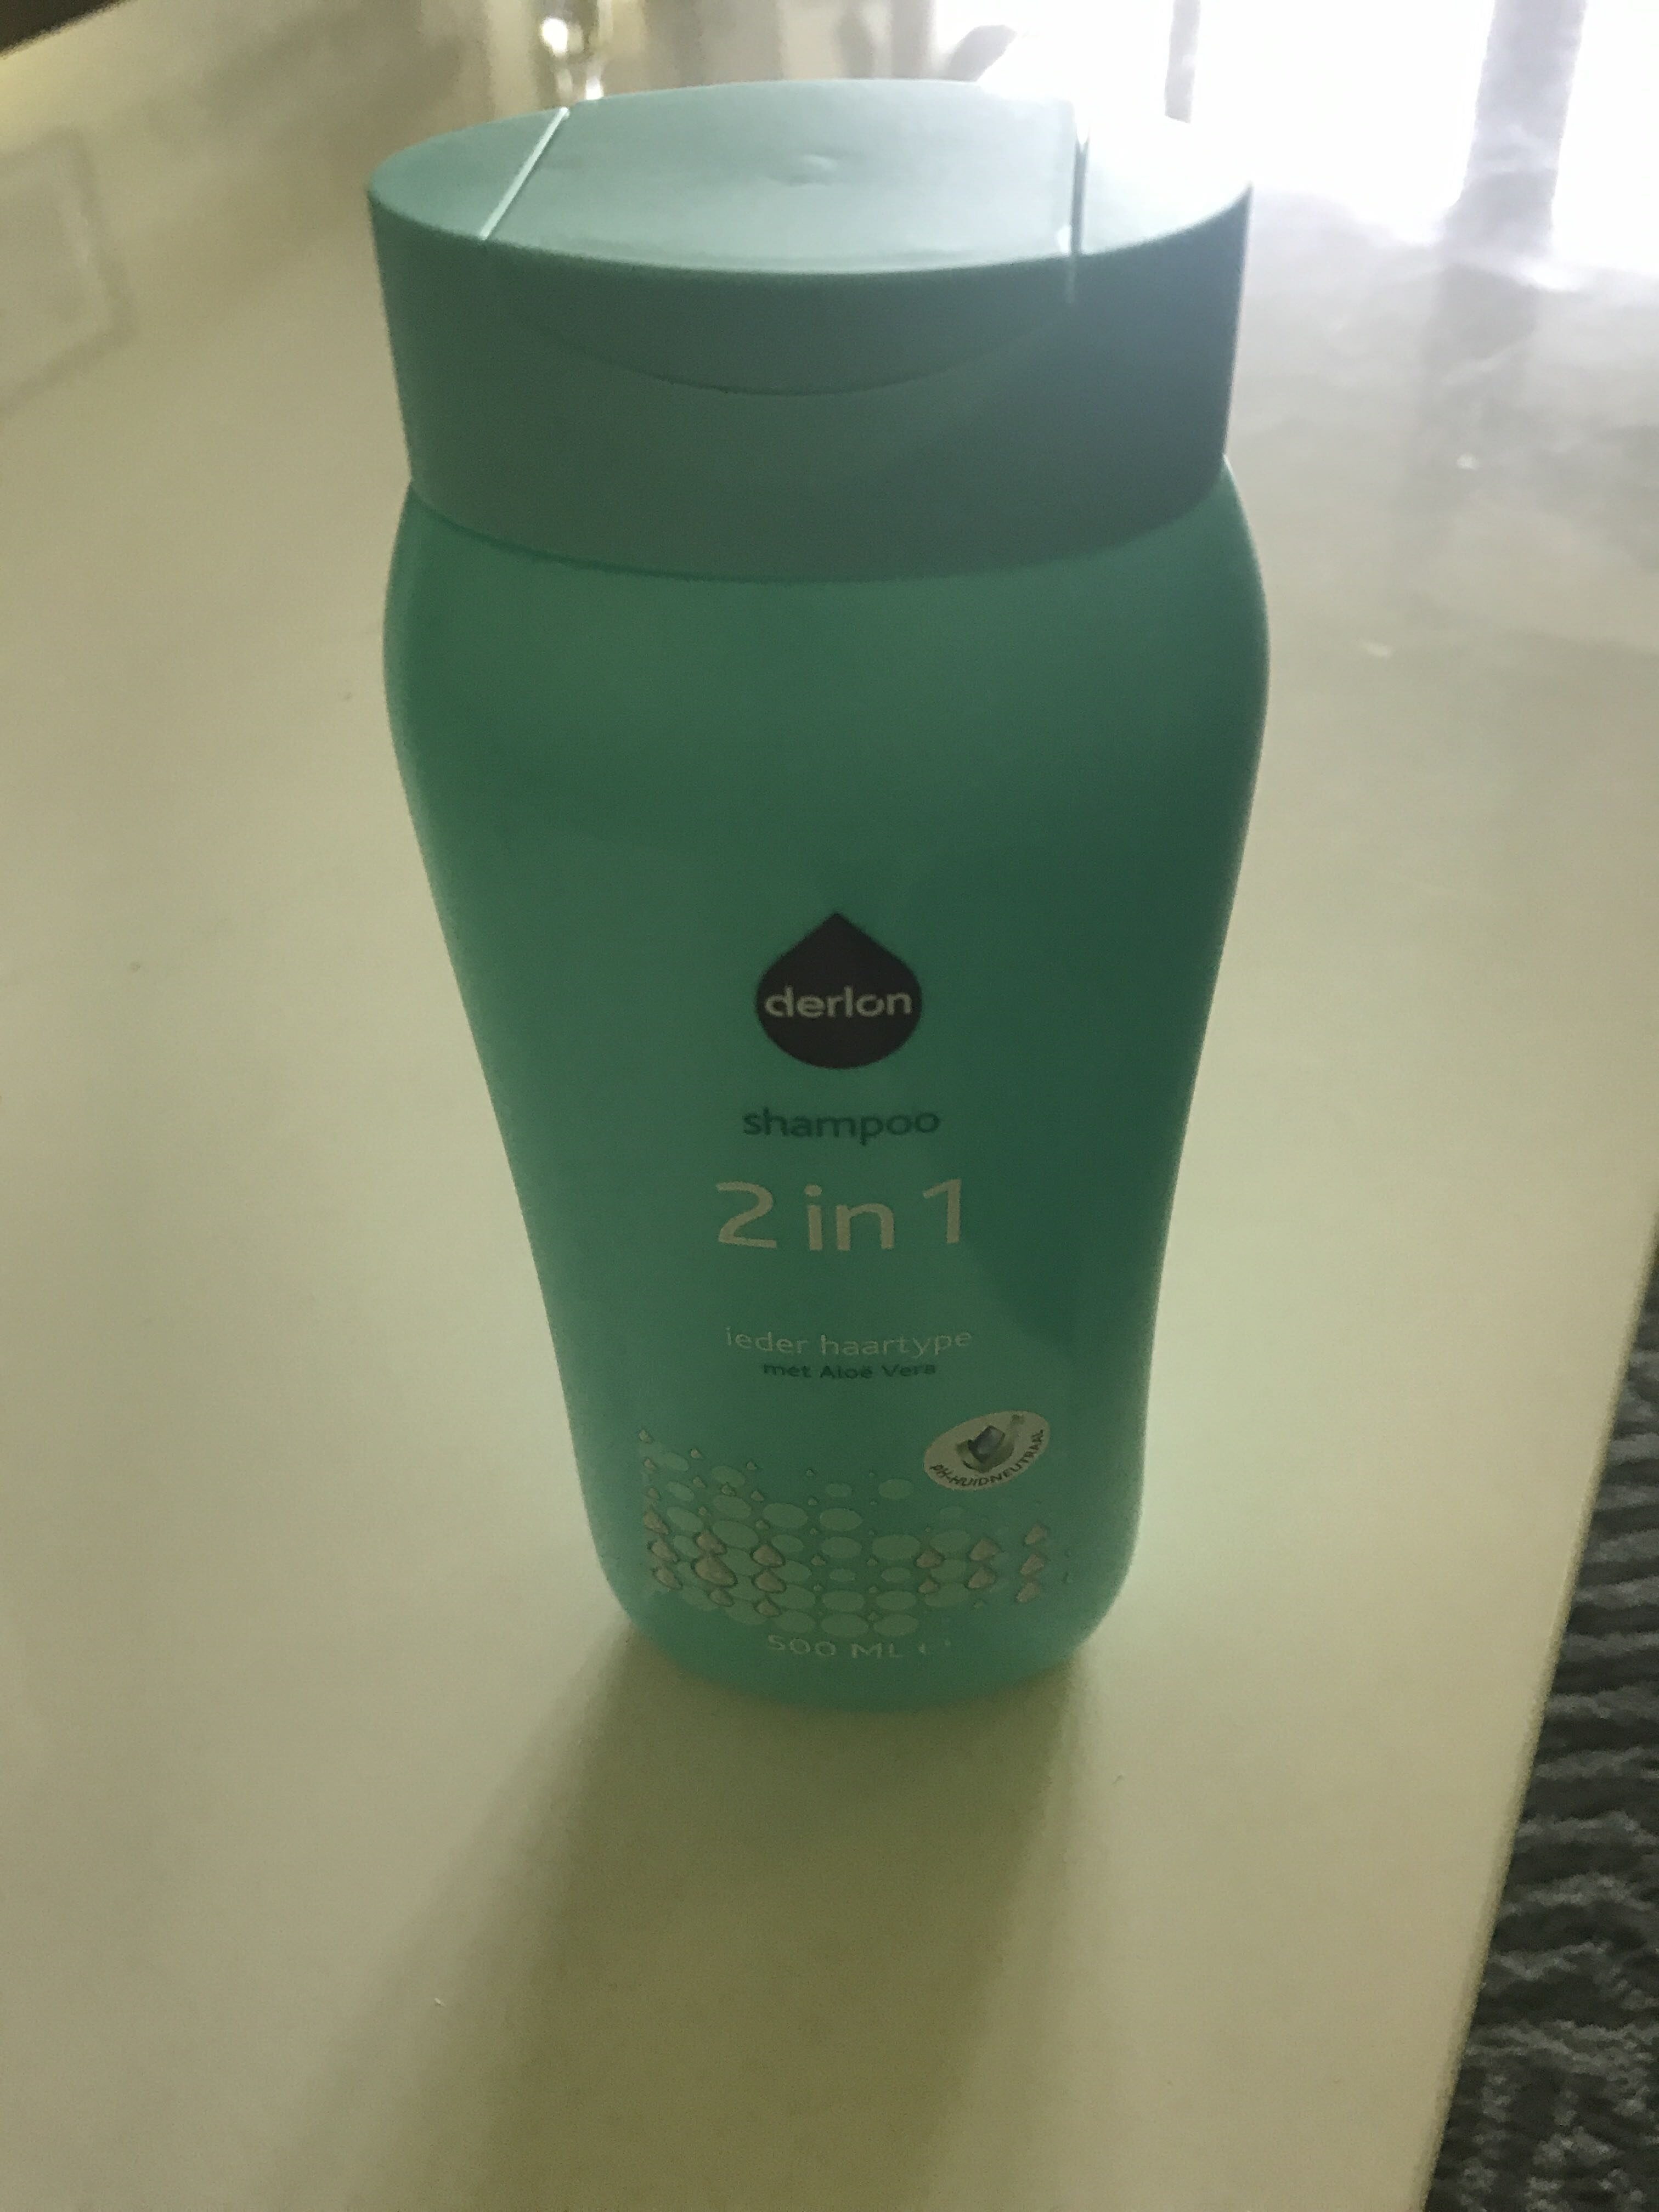 Shampoo 2 in 1 (aloe vera) - Produto - en